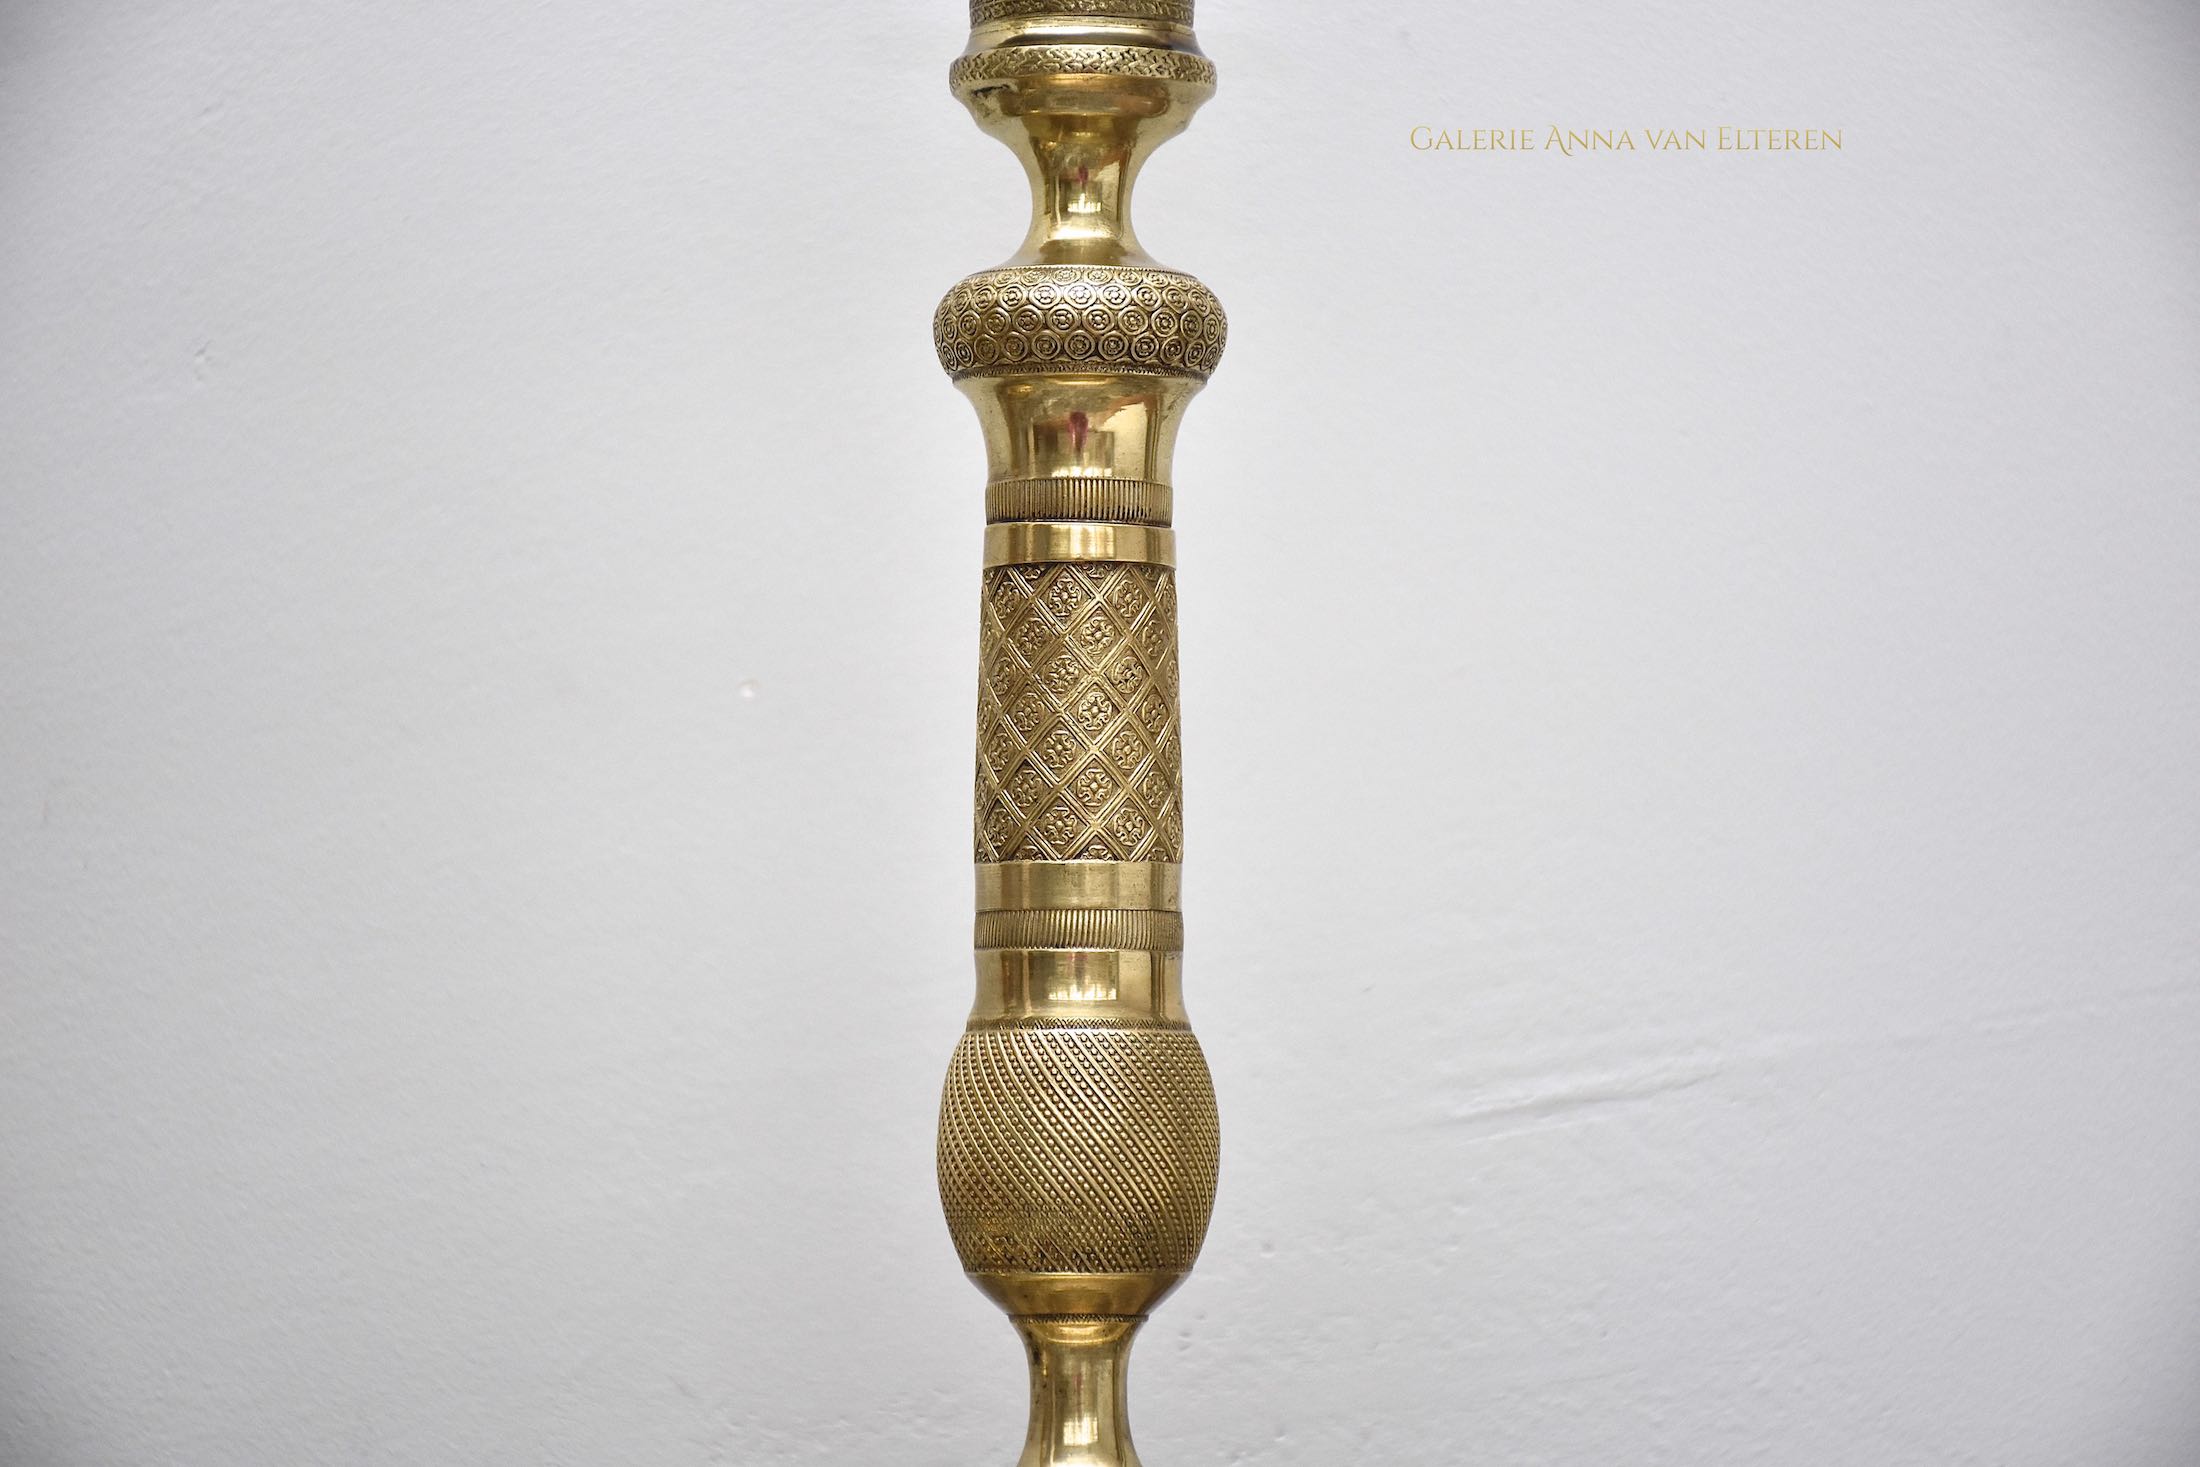 19th c. pair of gilt bronze Empire candlesticks